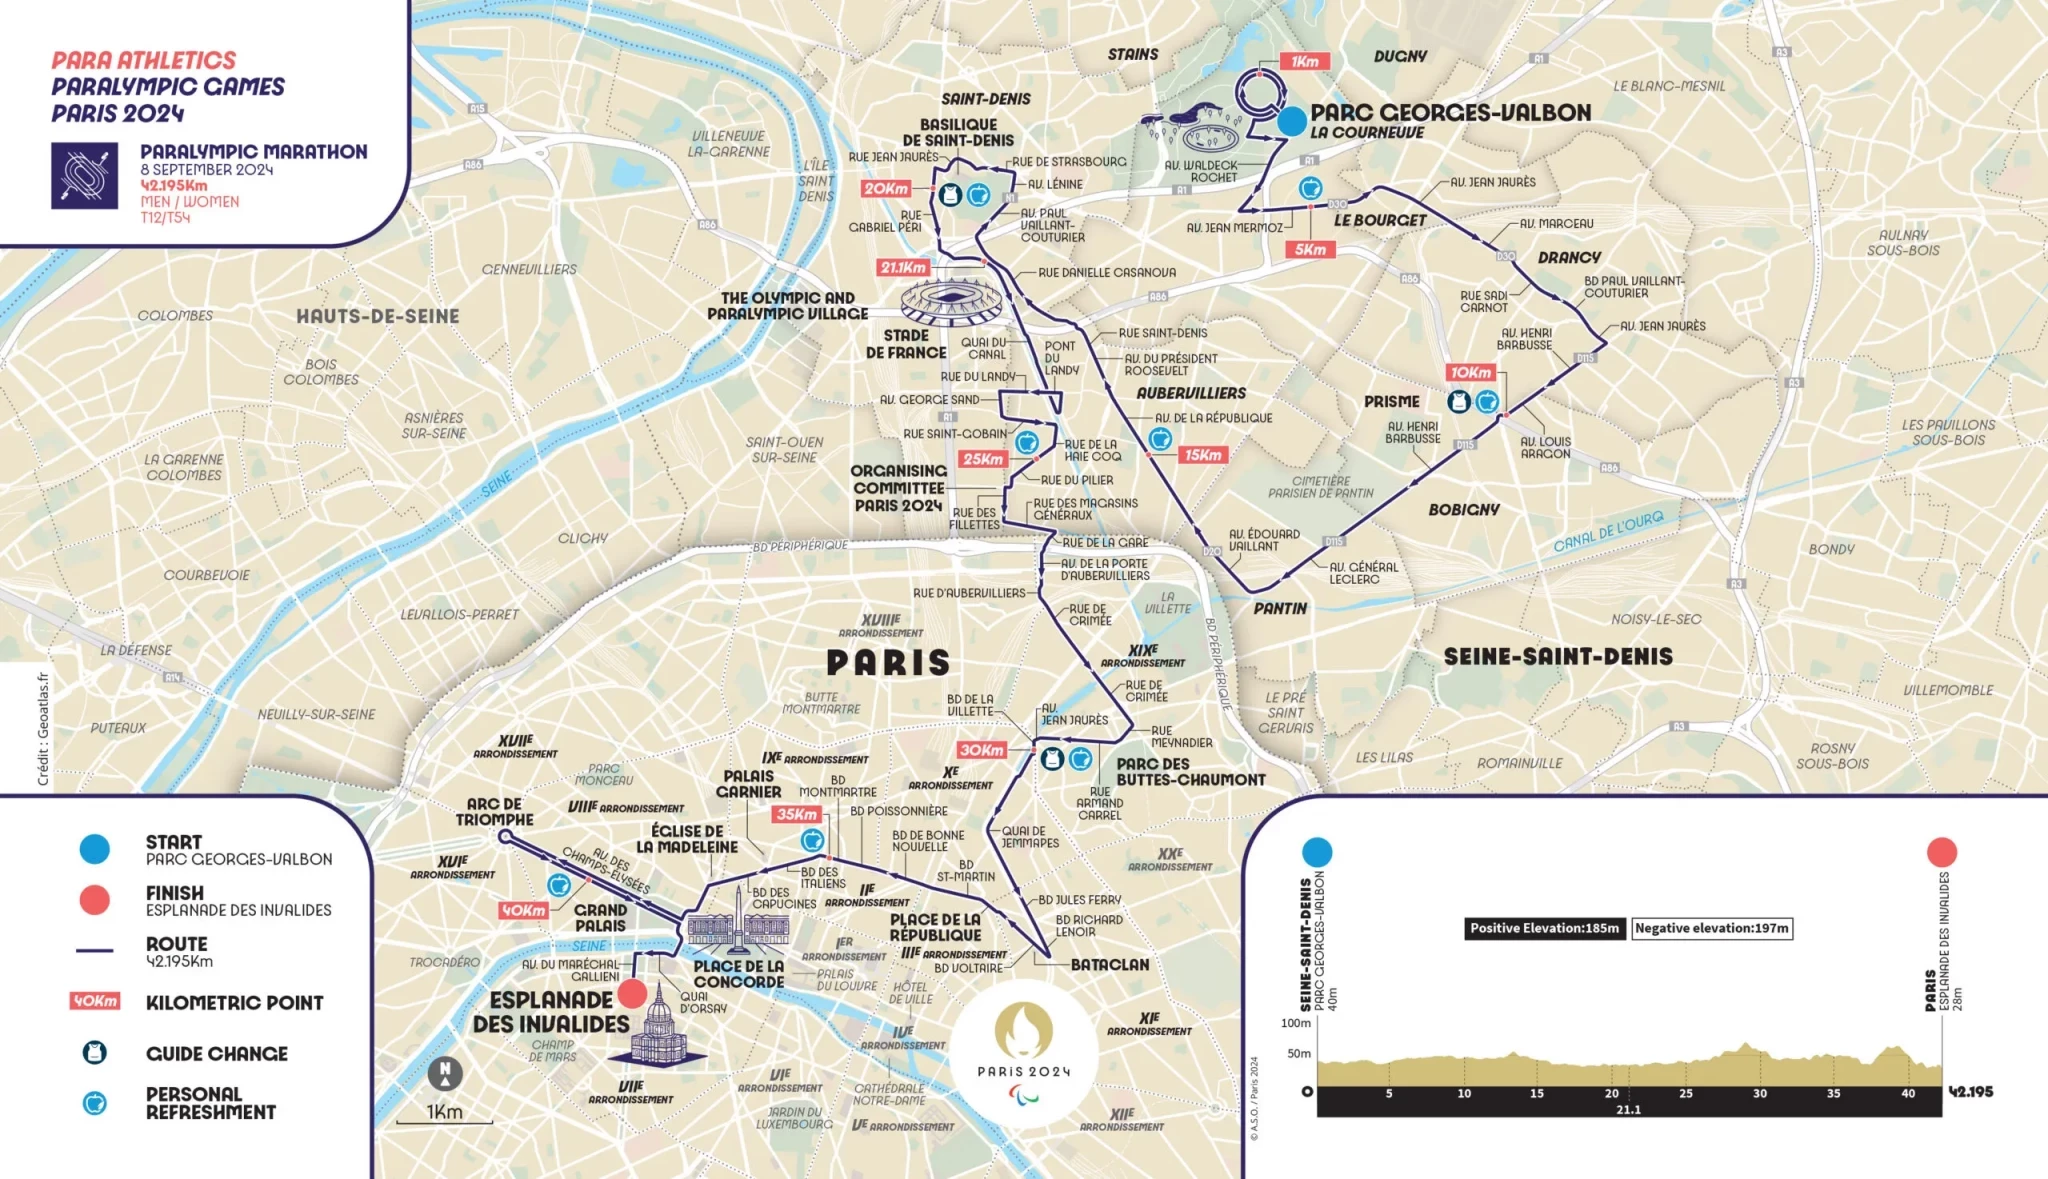 The marathon route will start in Seine-Saint-Denis before heading to central Paris ©Paris 2024